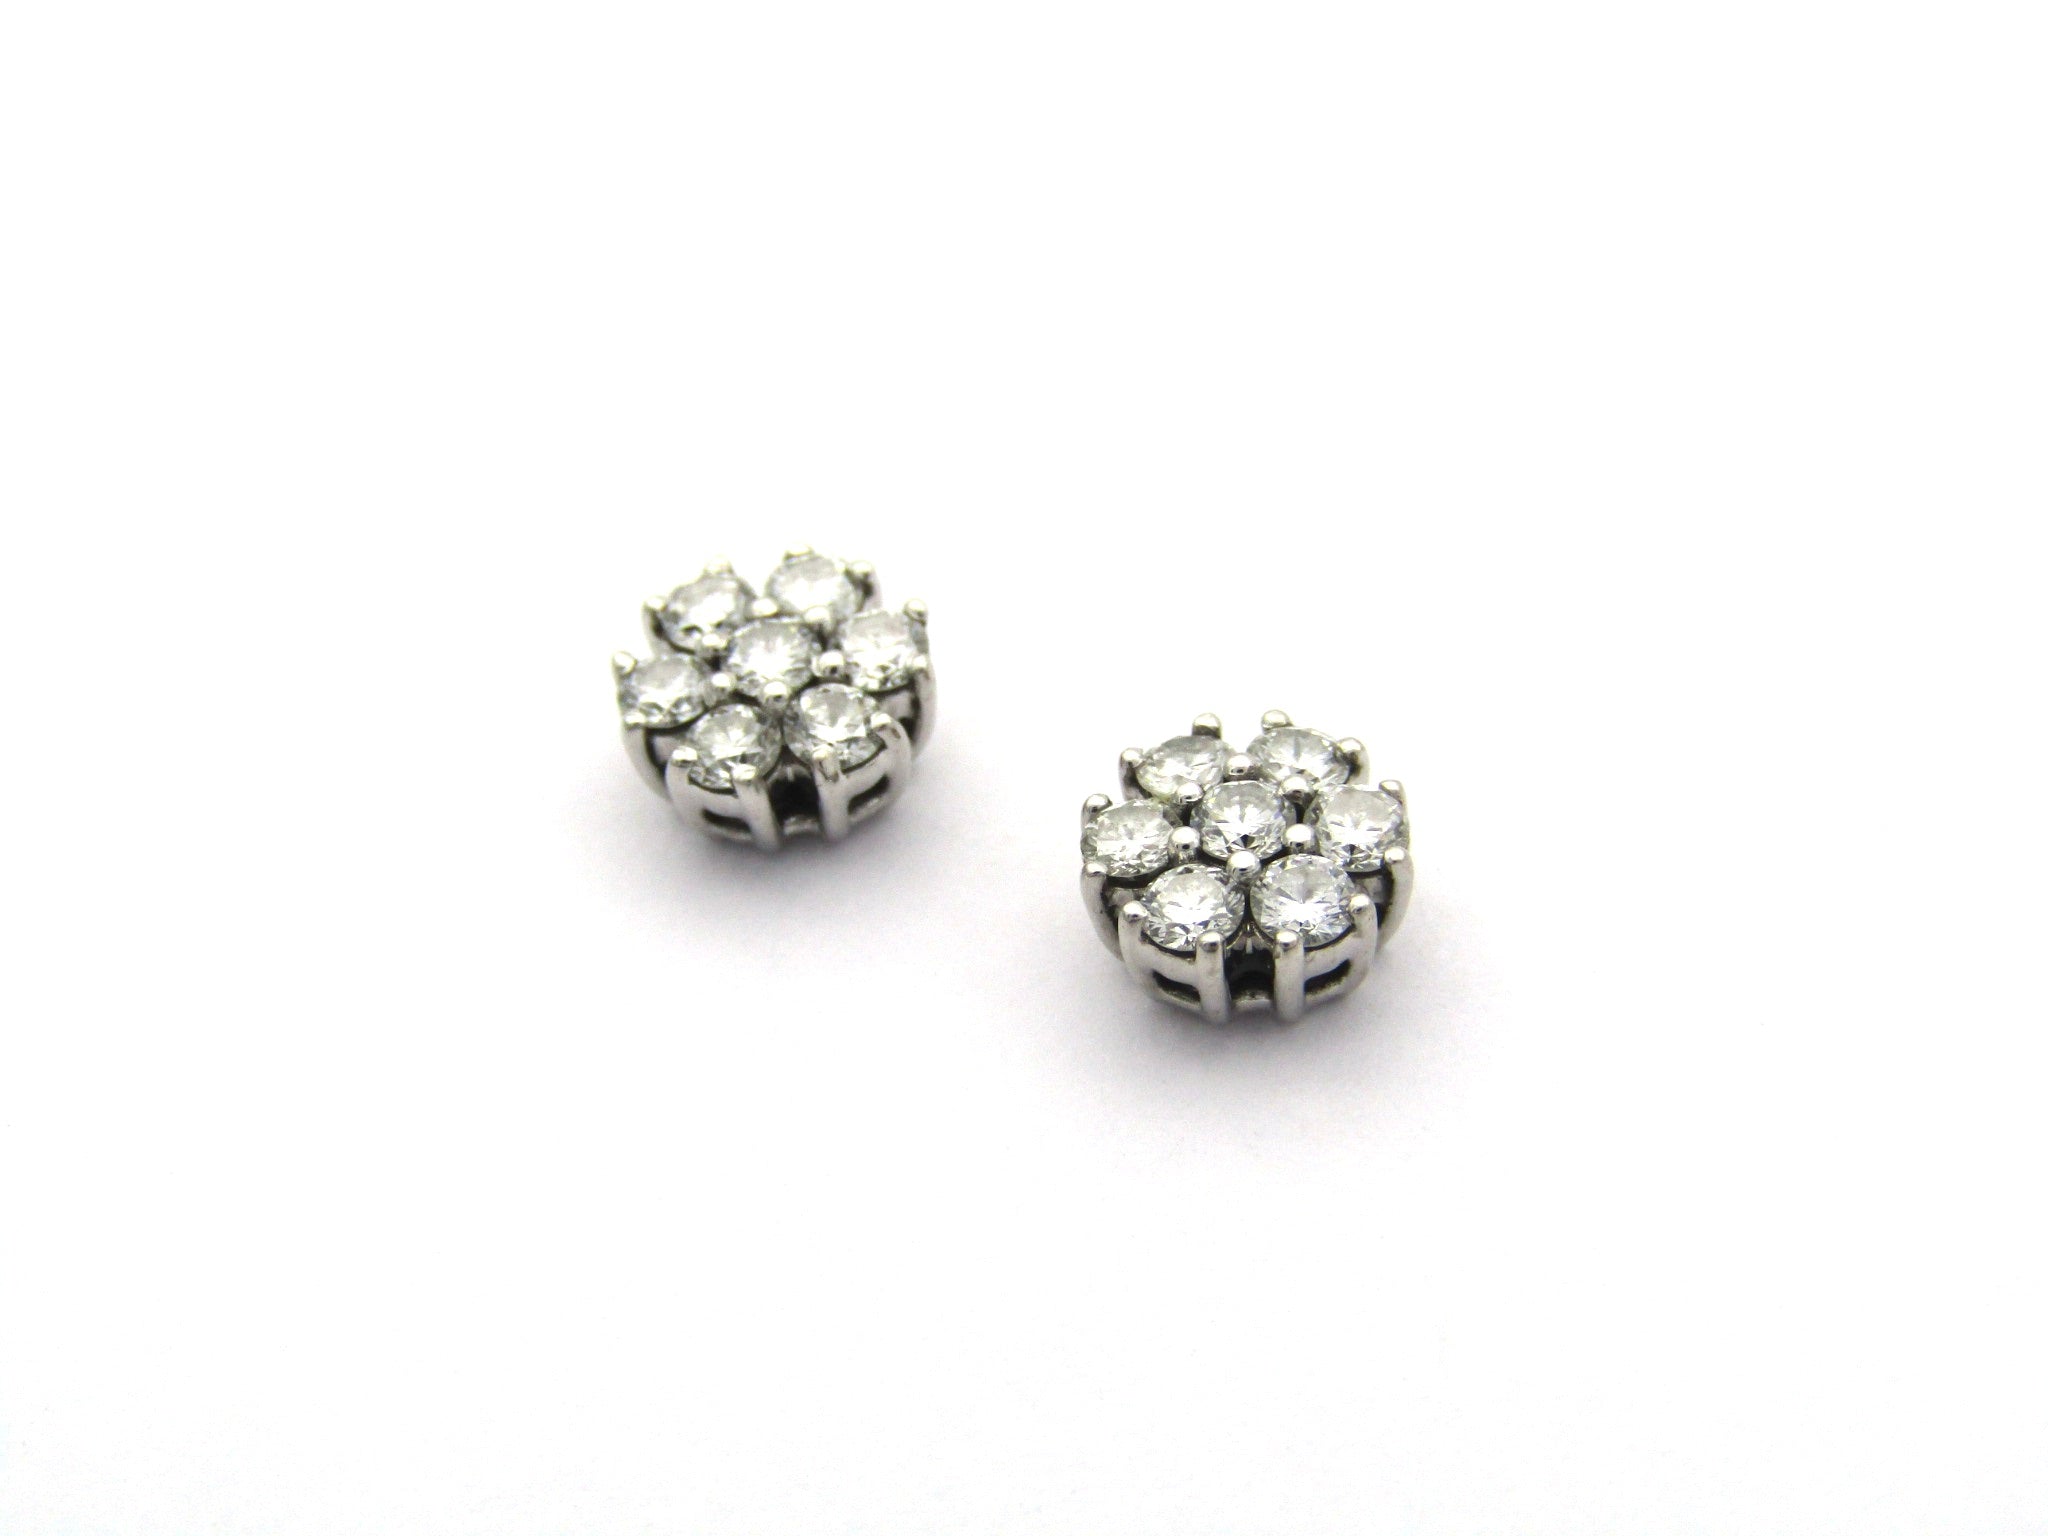 18K gold diamond cluster earrings by Browns.